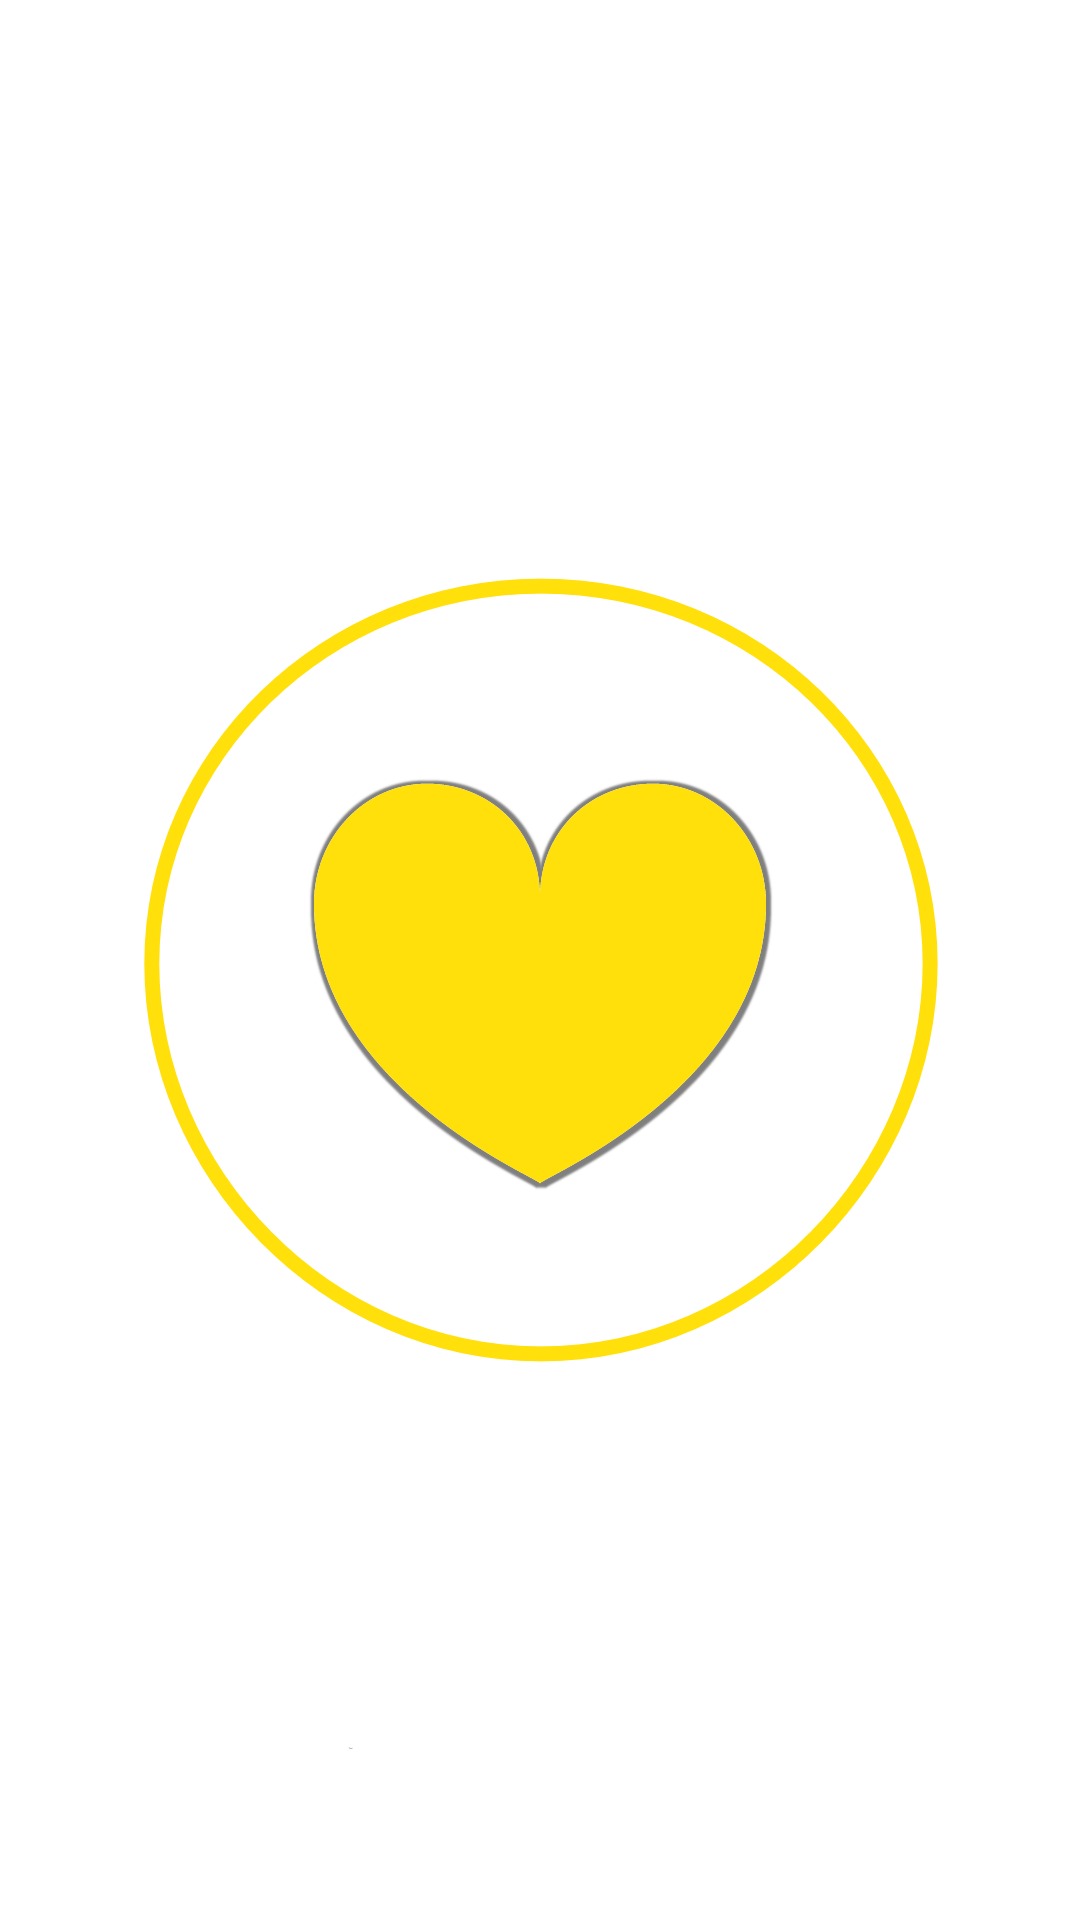 Instagram-cover-heart-yellow-lotnotes.com.jpg